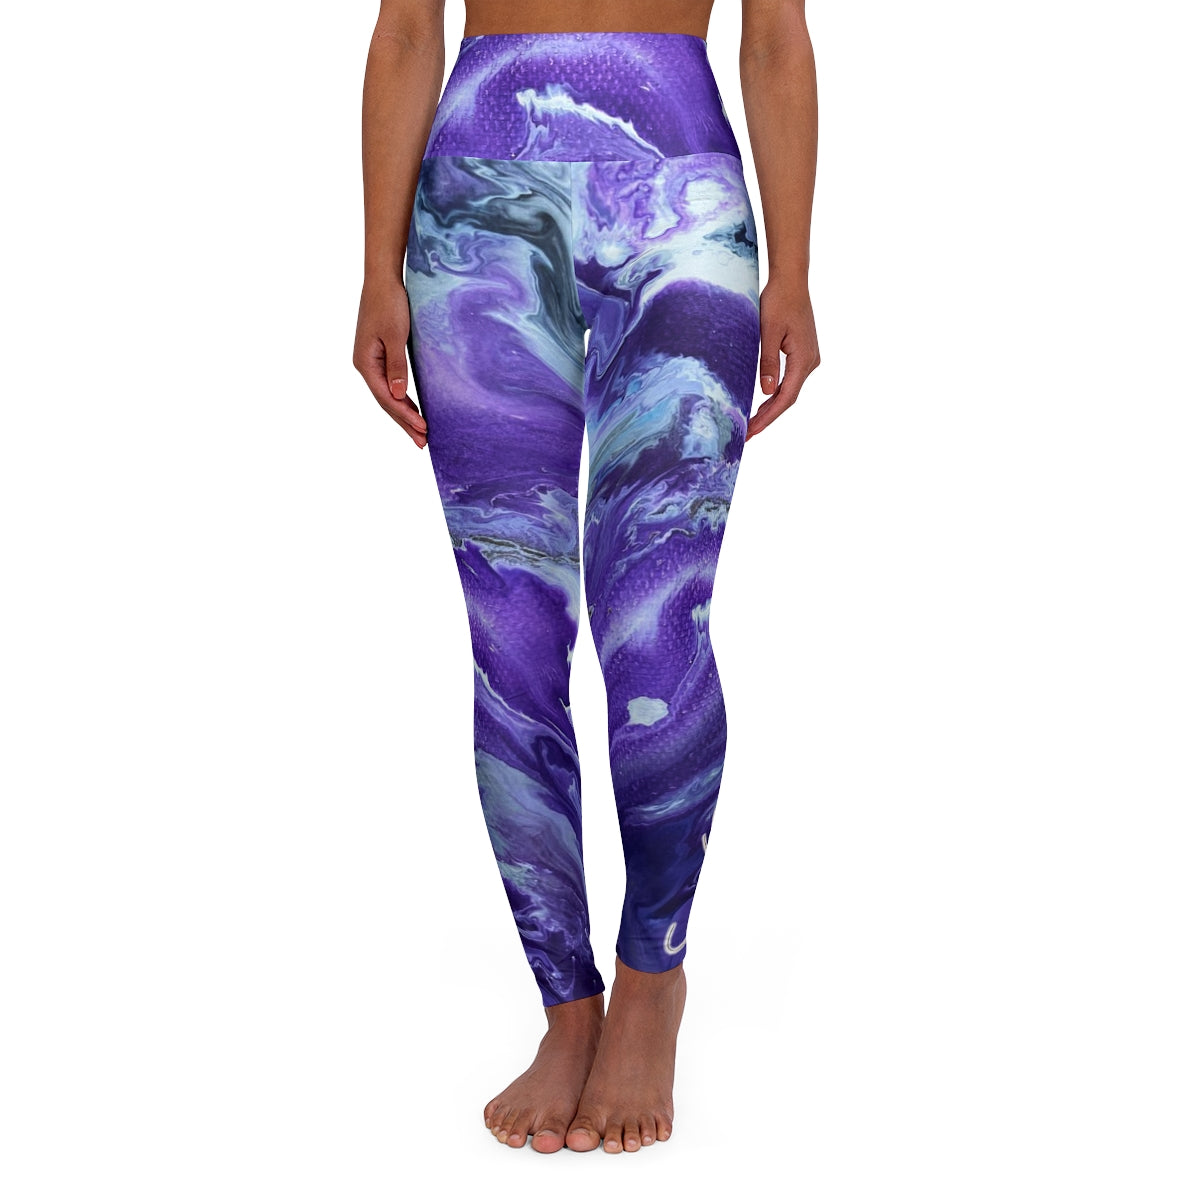 High Waisted Yoga Leggings - Ady's Purplez!